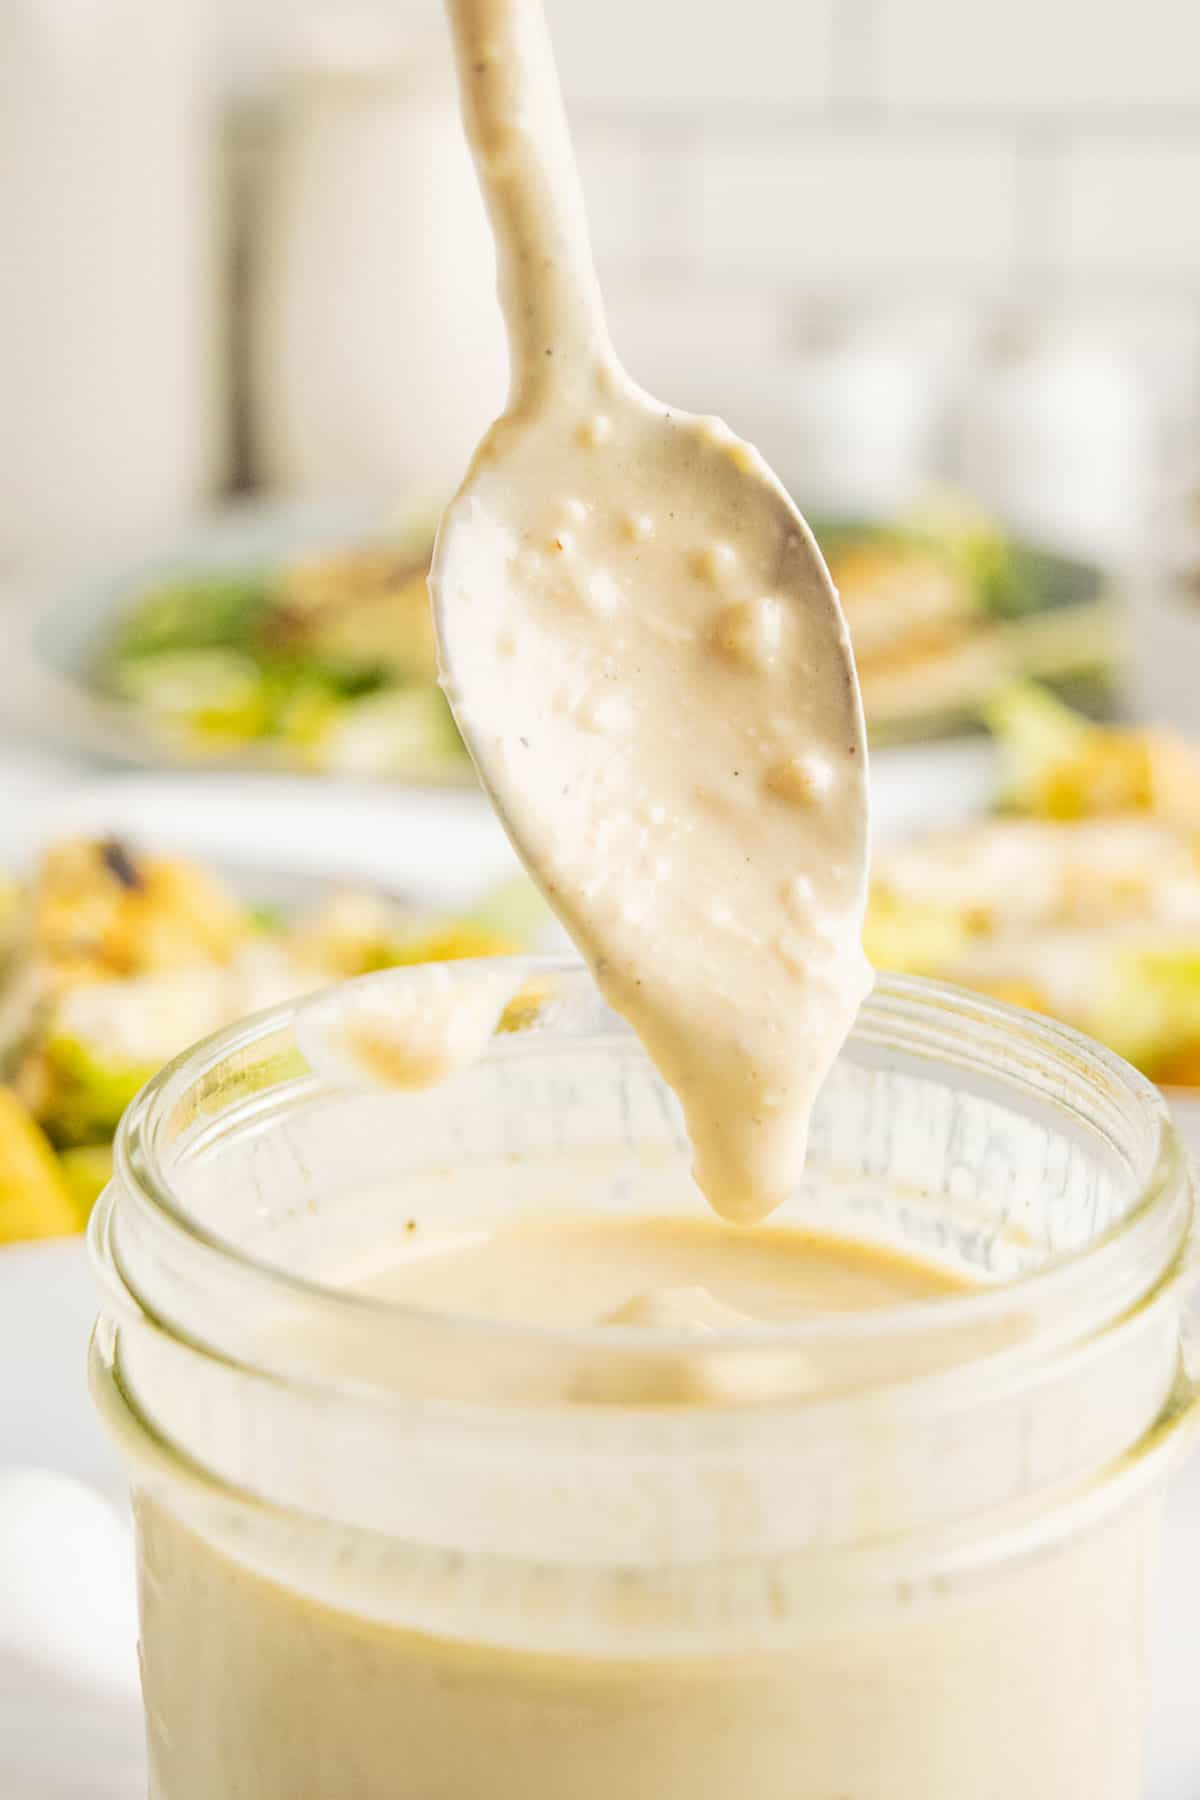 Creamy salad dressing dripping off a spoon.